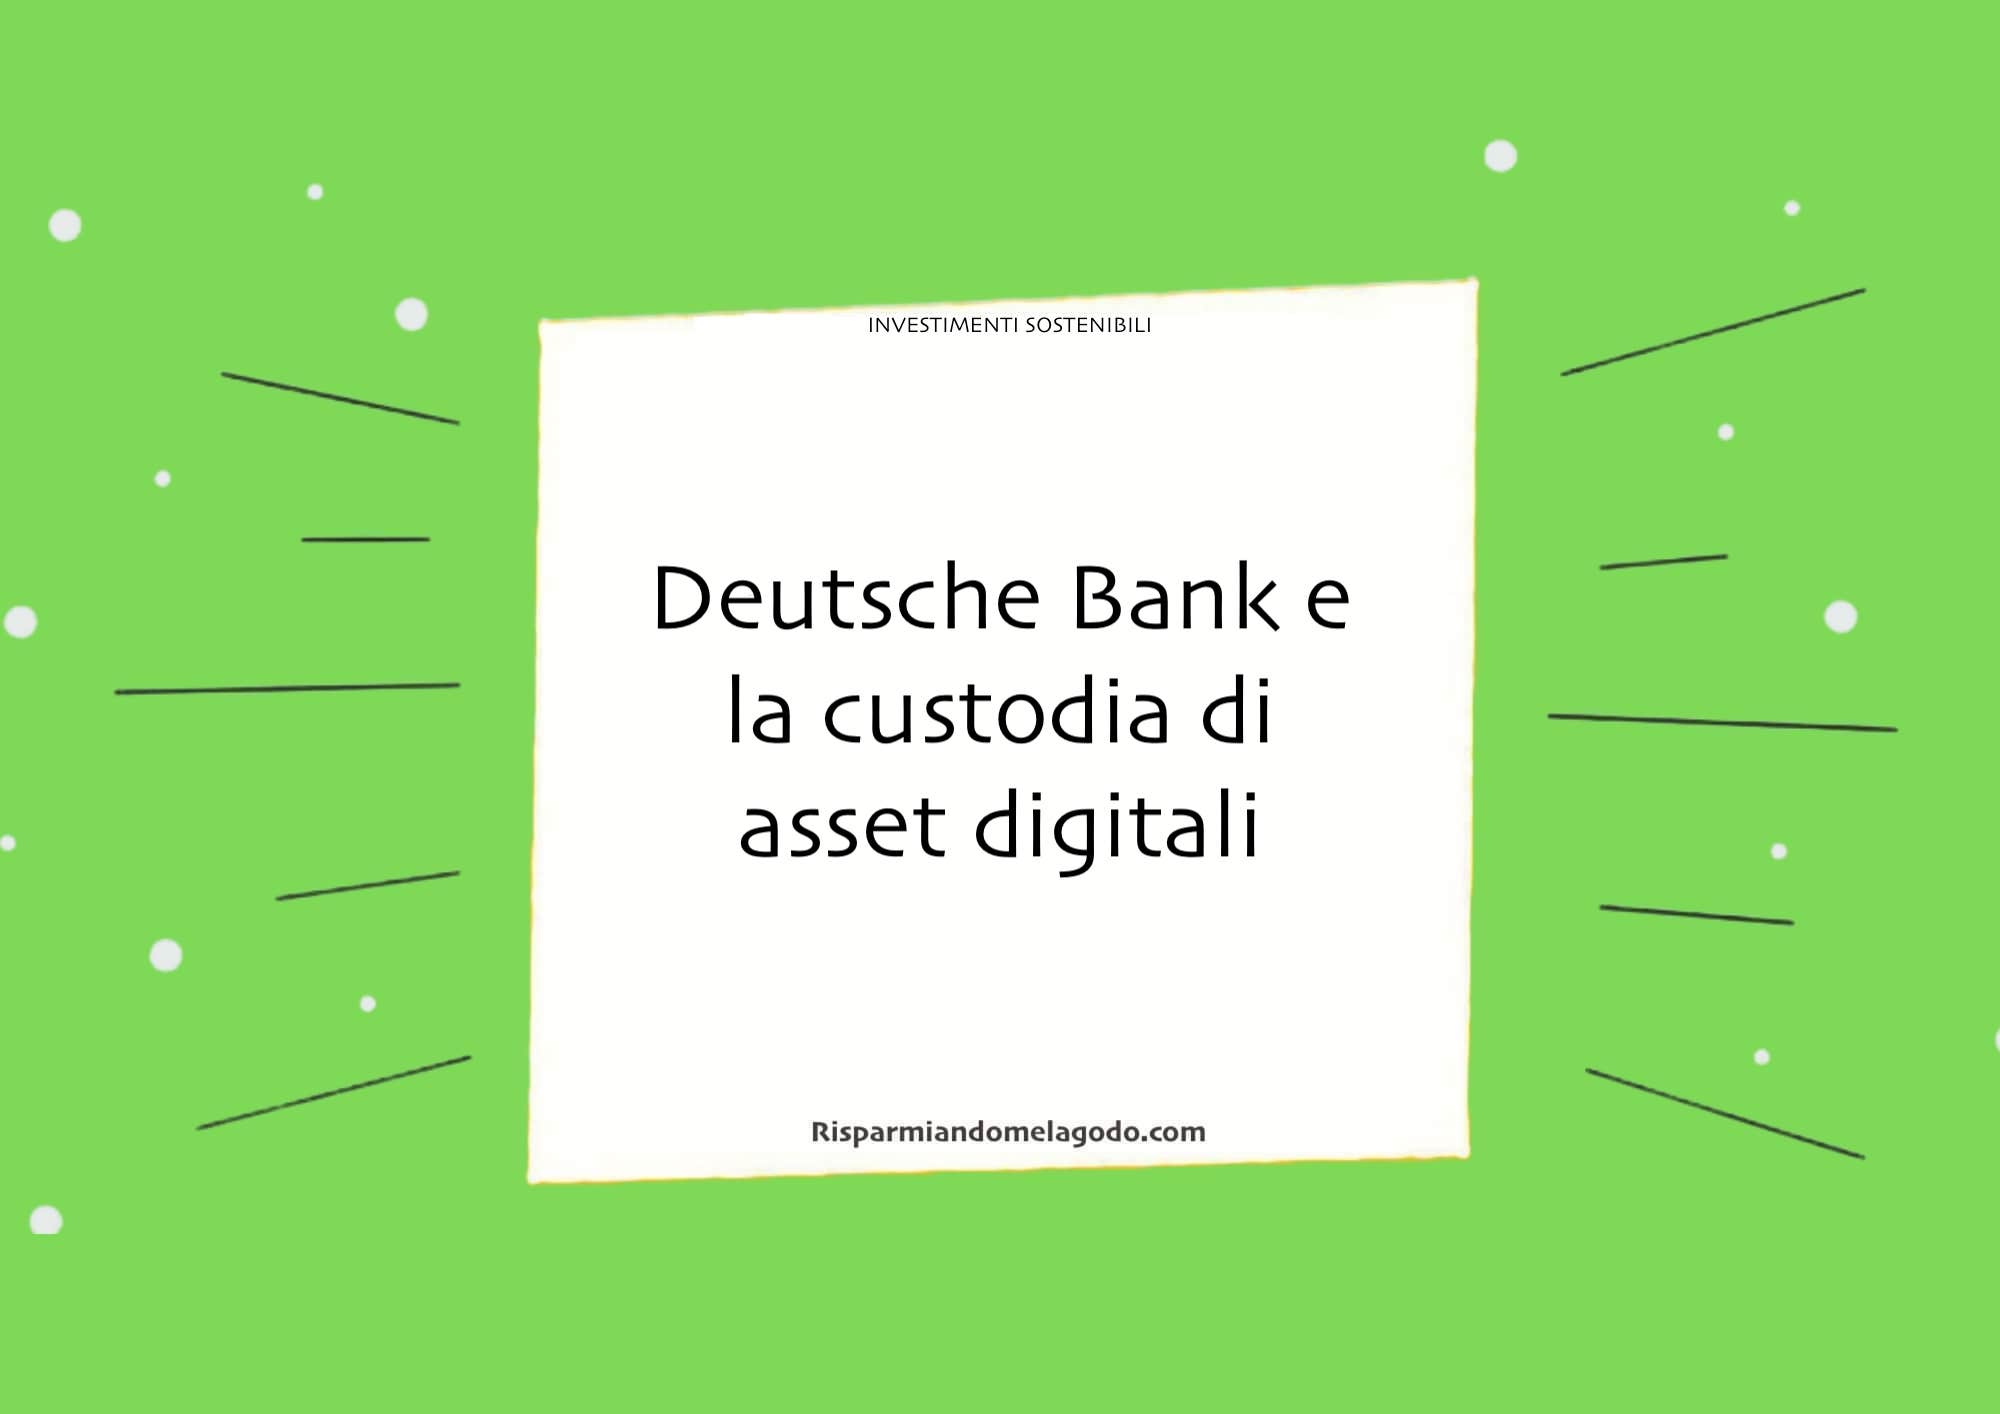 Deutsche Bank e la custodia di asset digitali